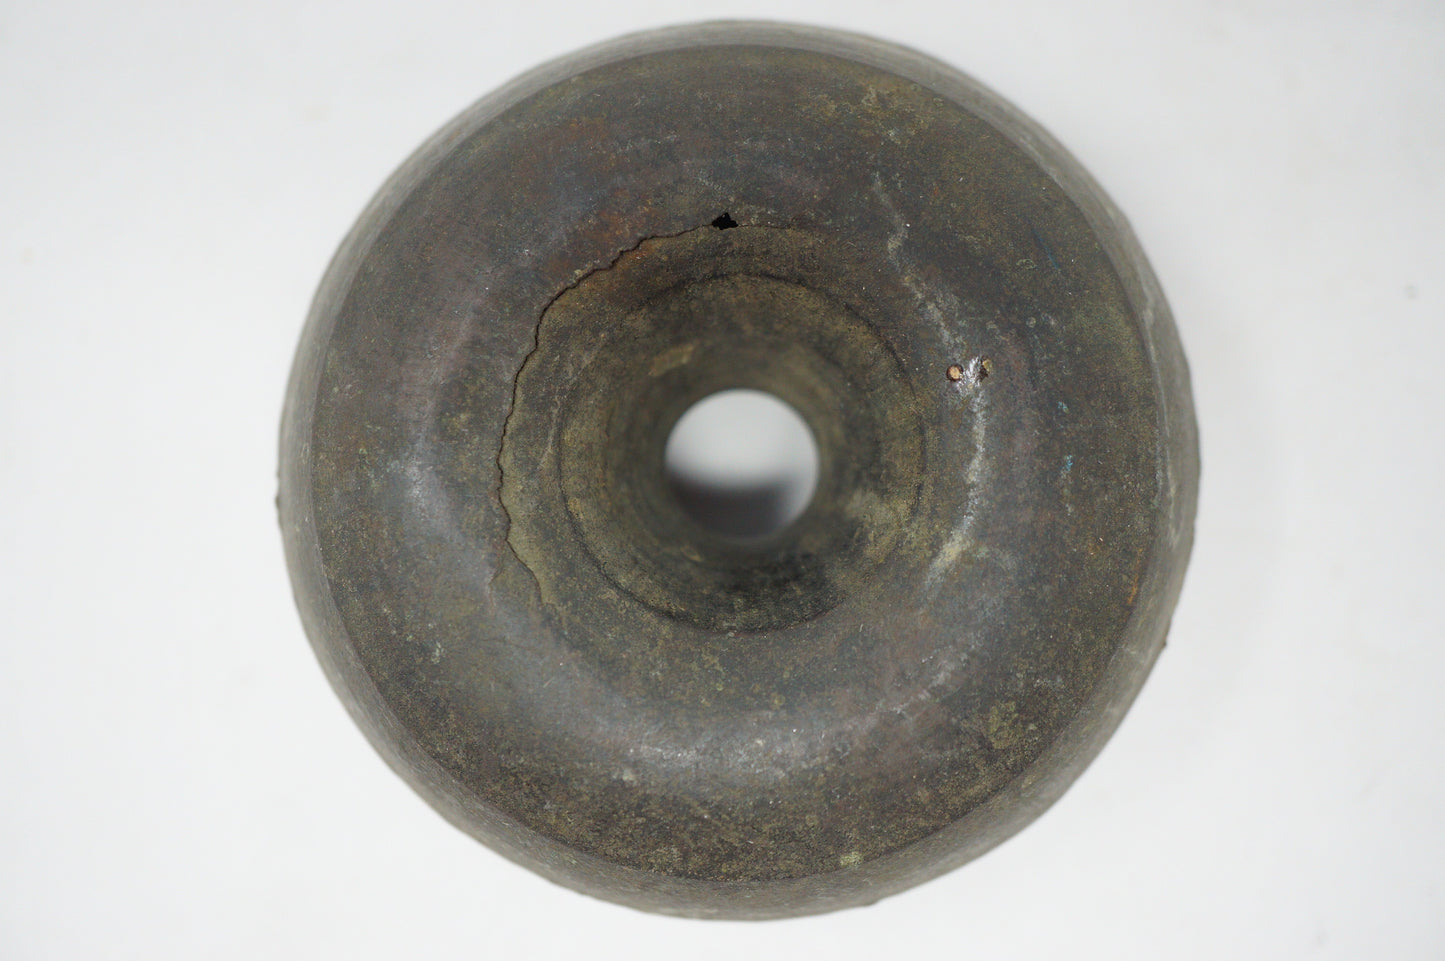 Japanische Pferdeglocke aus dem 19. Jahrhundert, antike Original-Geschirrglocke aus Japan 0410E4